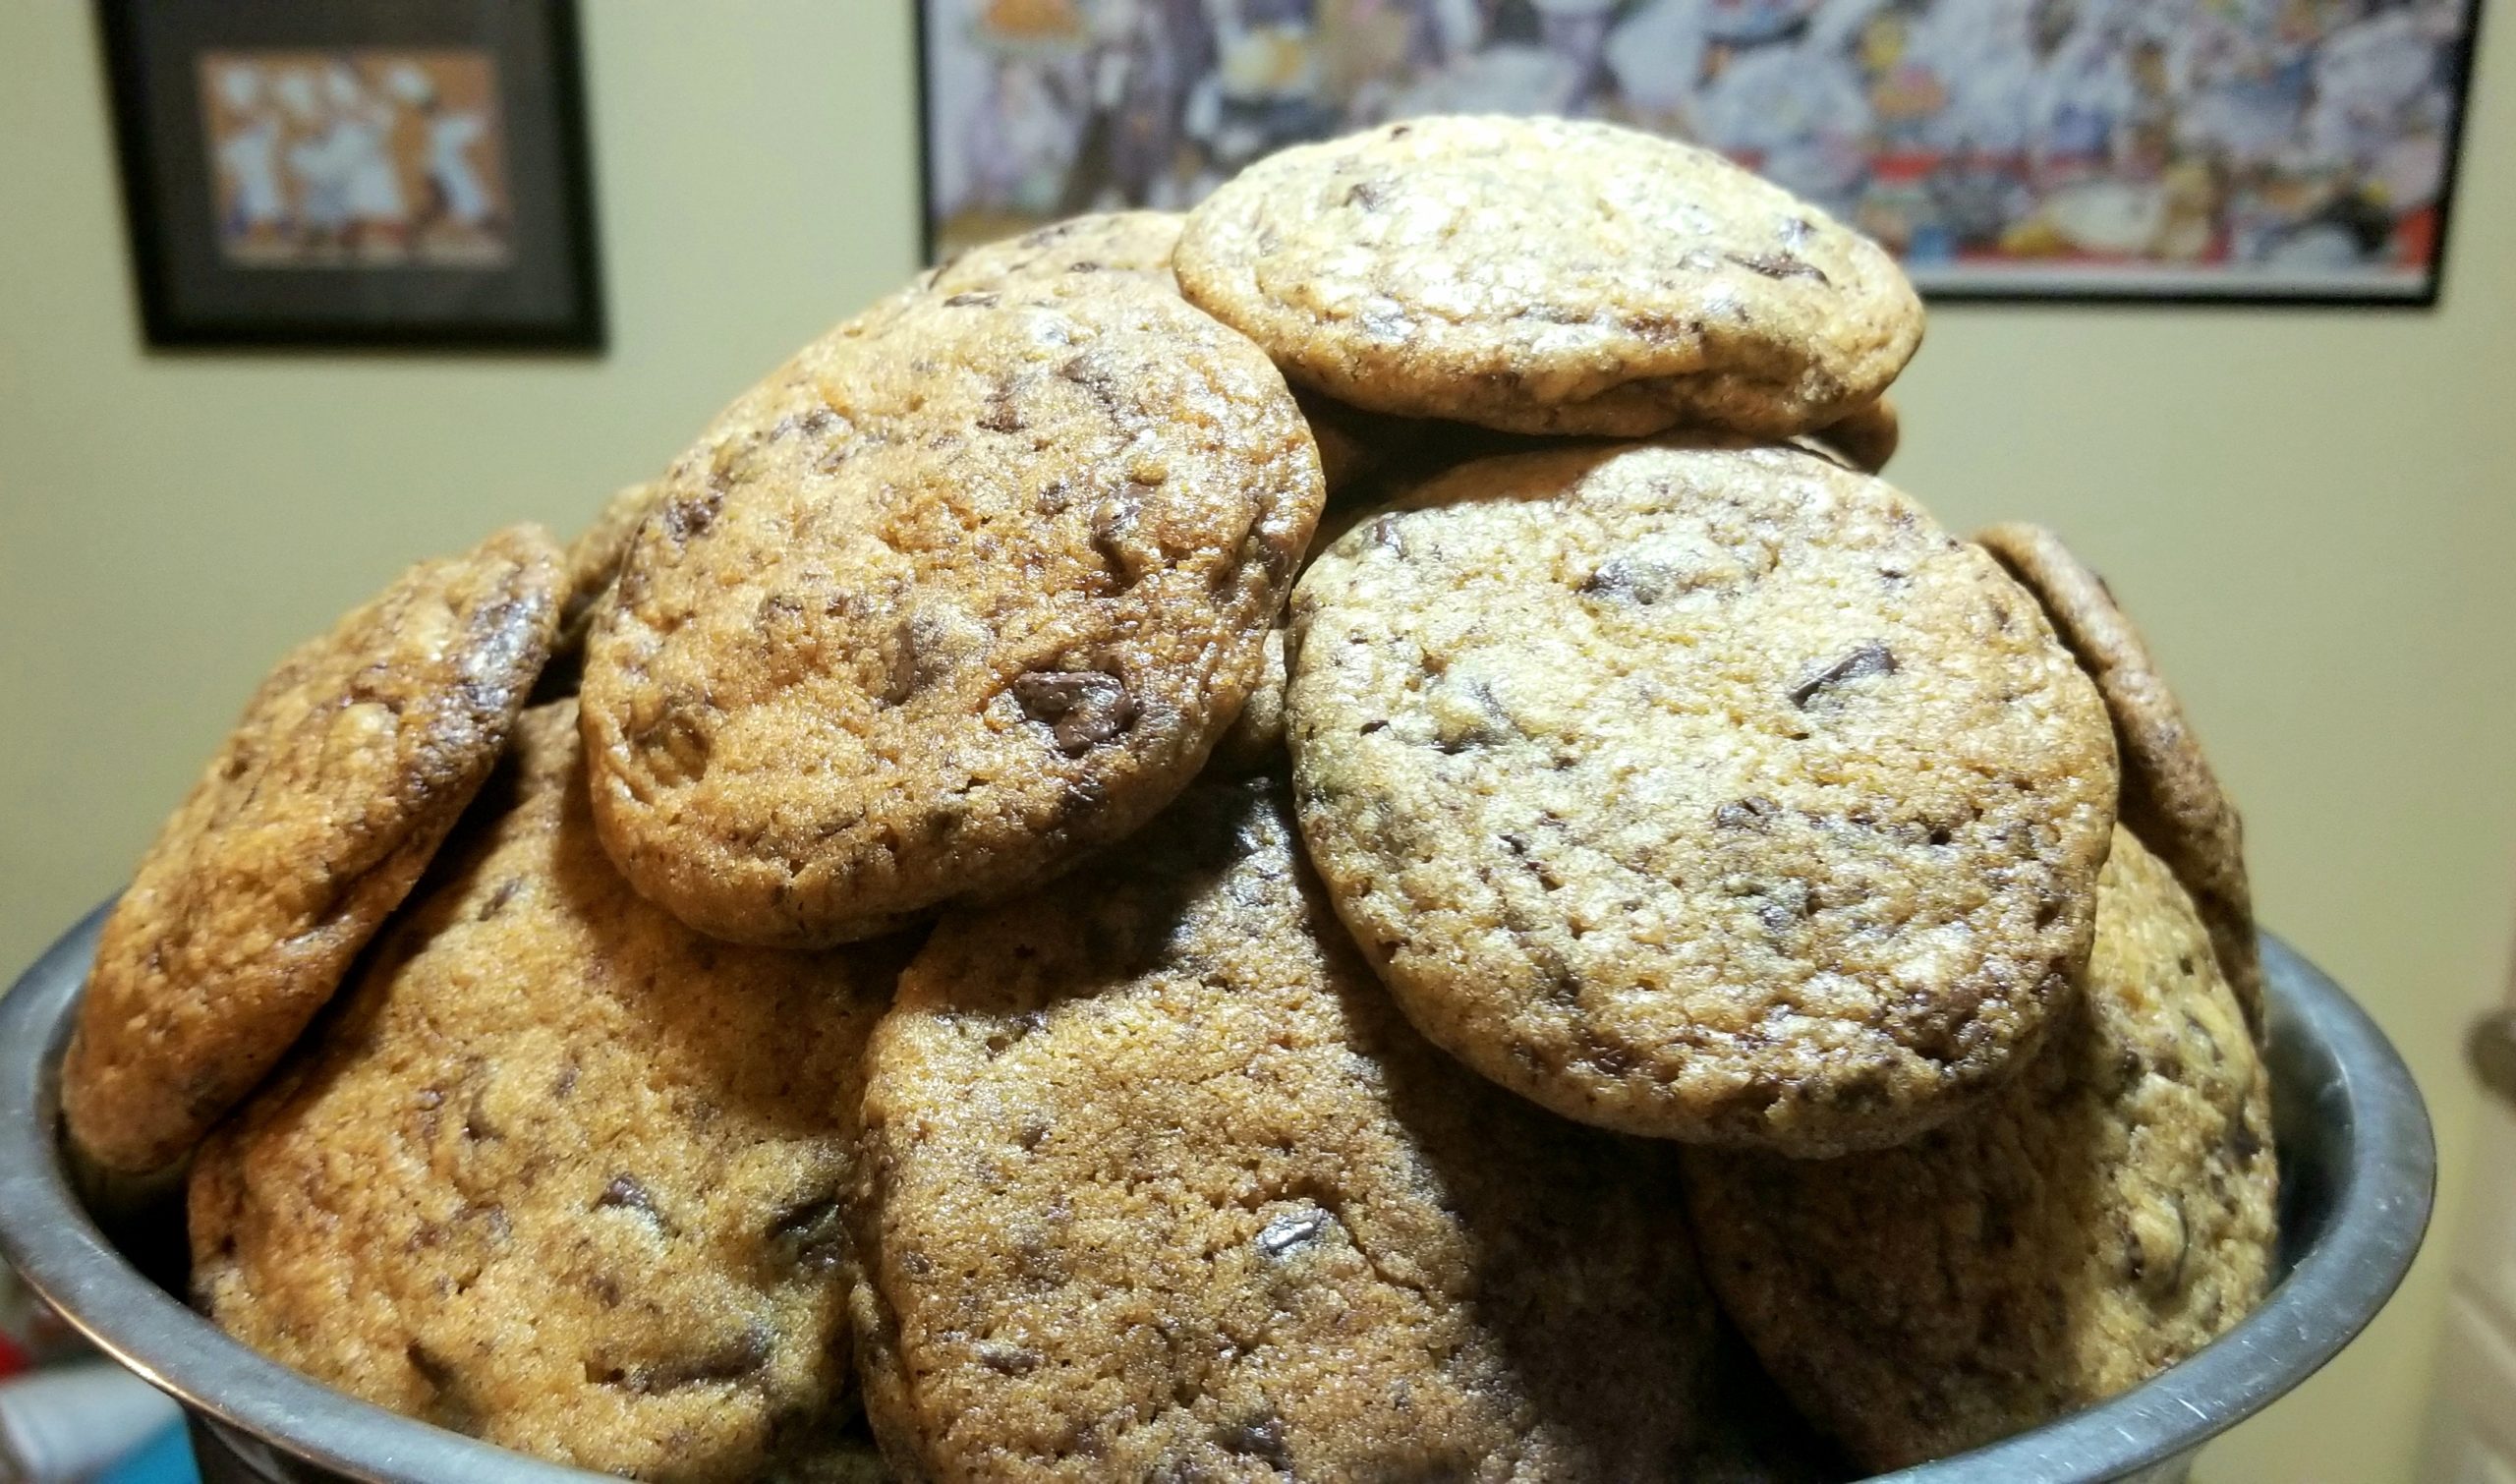 Jessica Craig's chocolate chunk cookies.